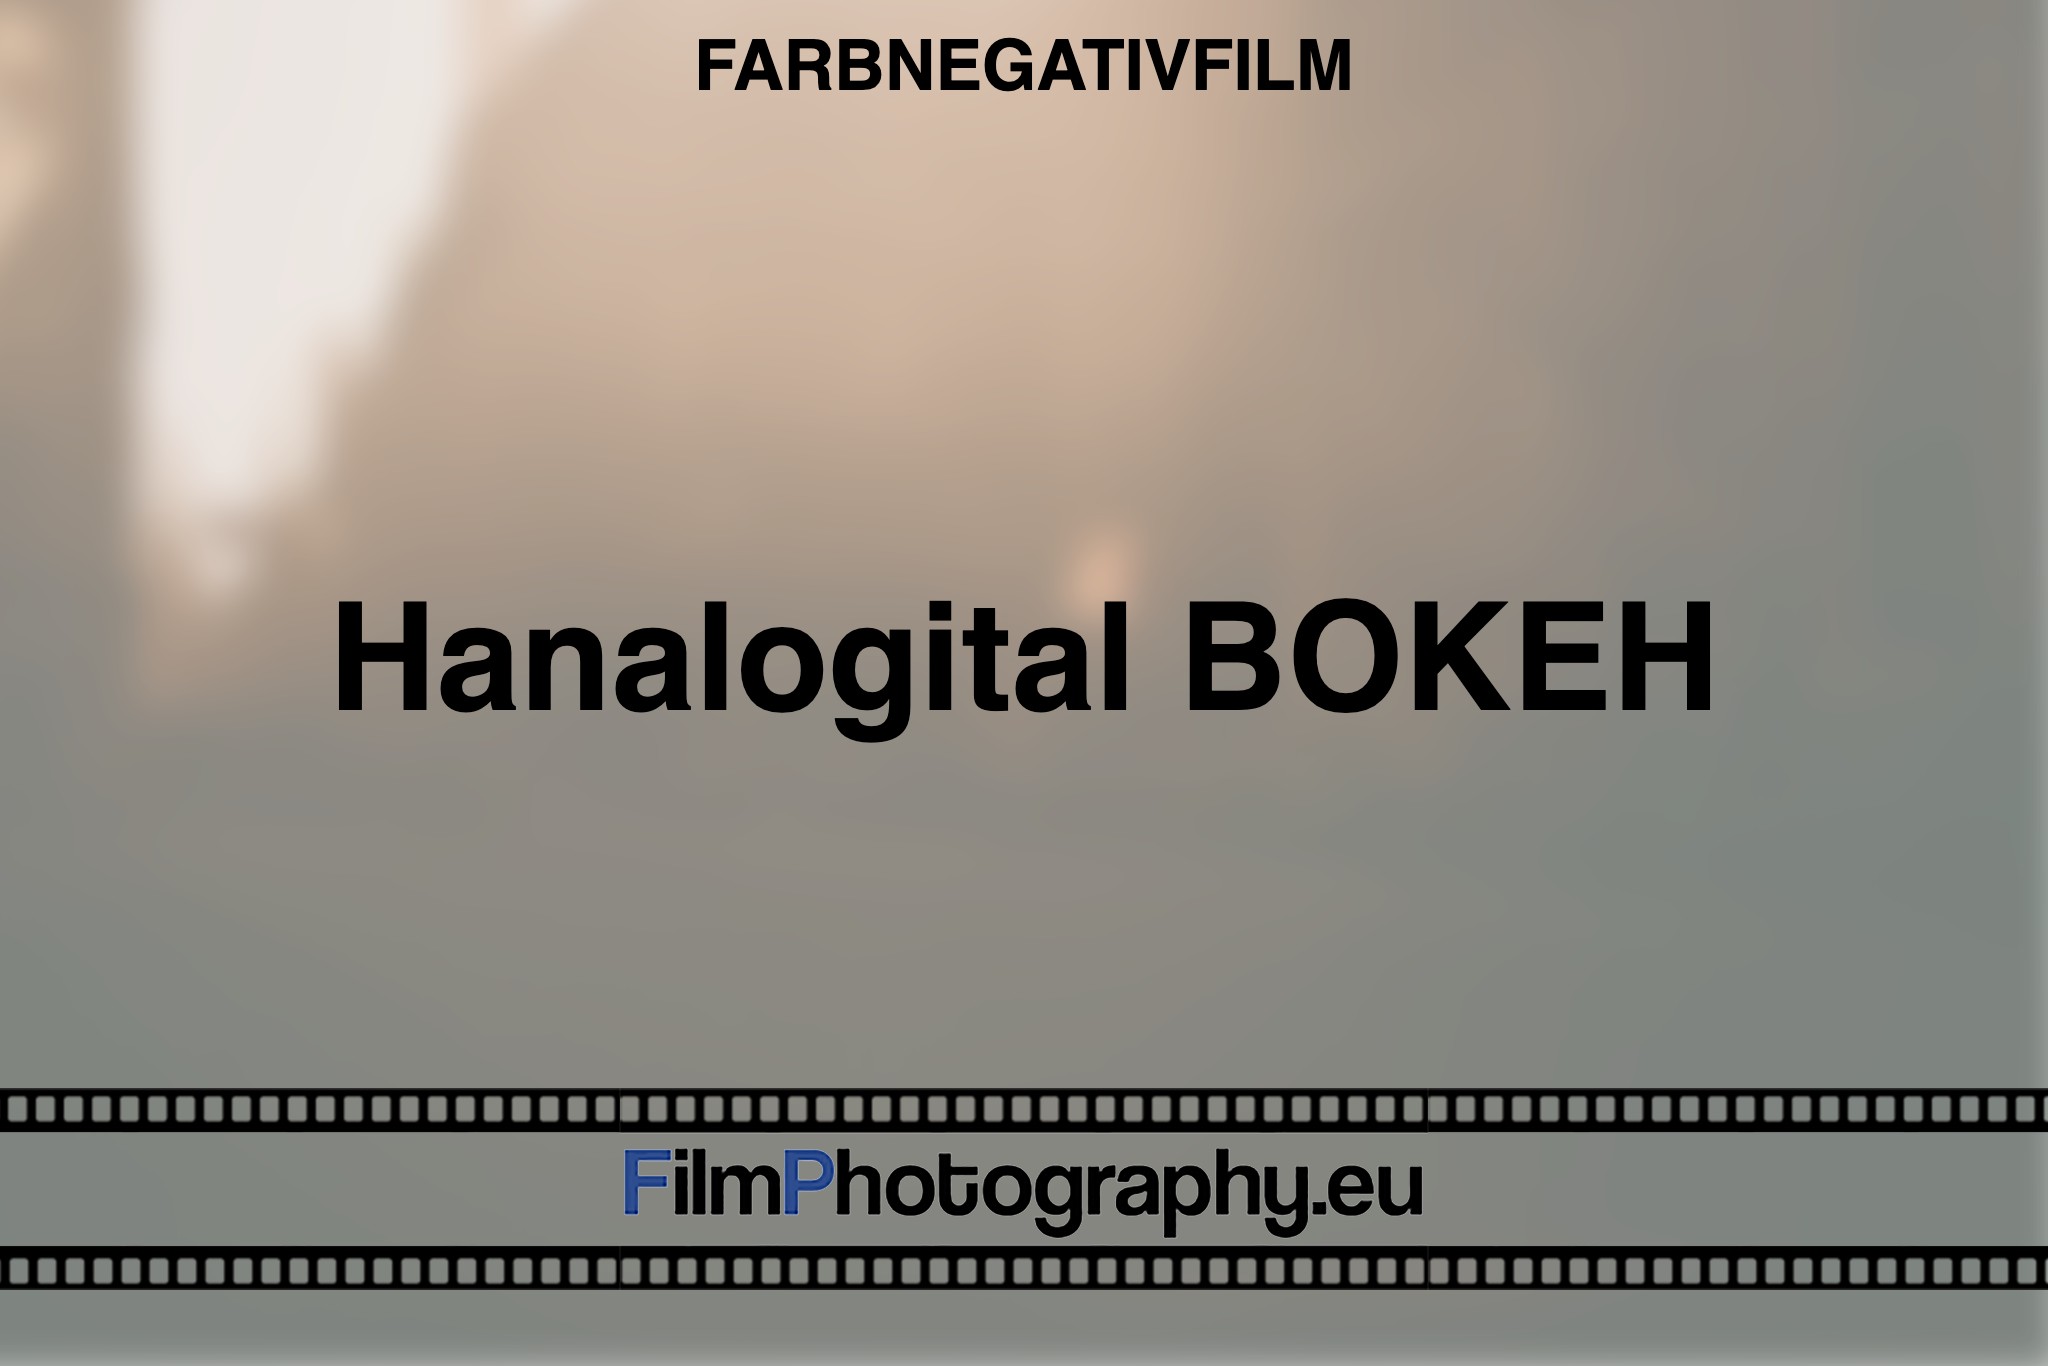 hanalogital-bokeh-farbnegativfilm-bnv